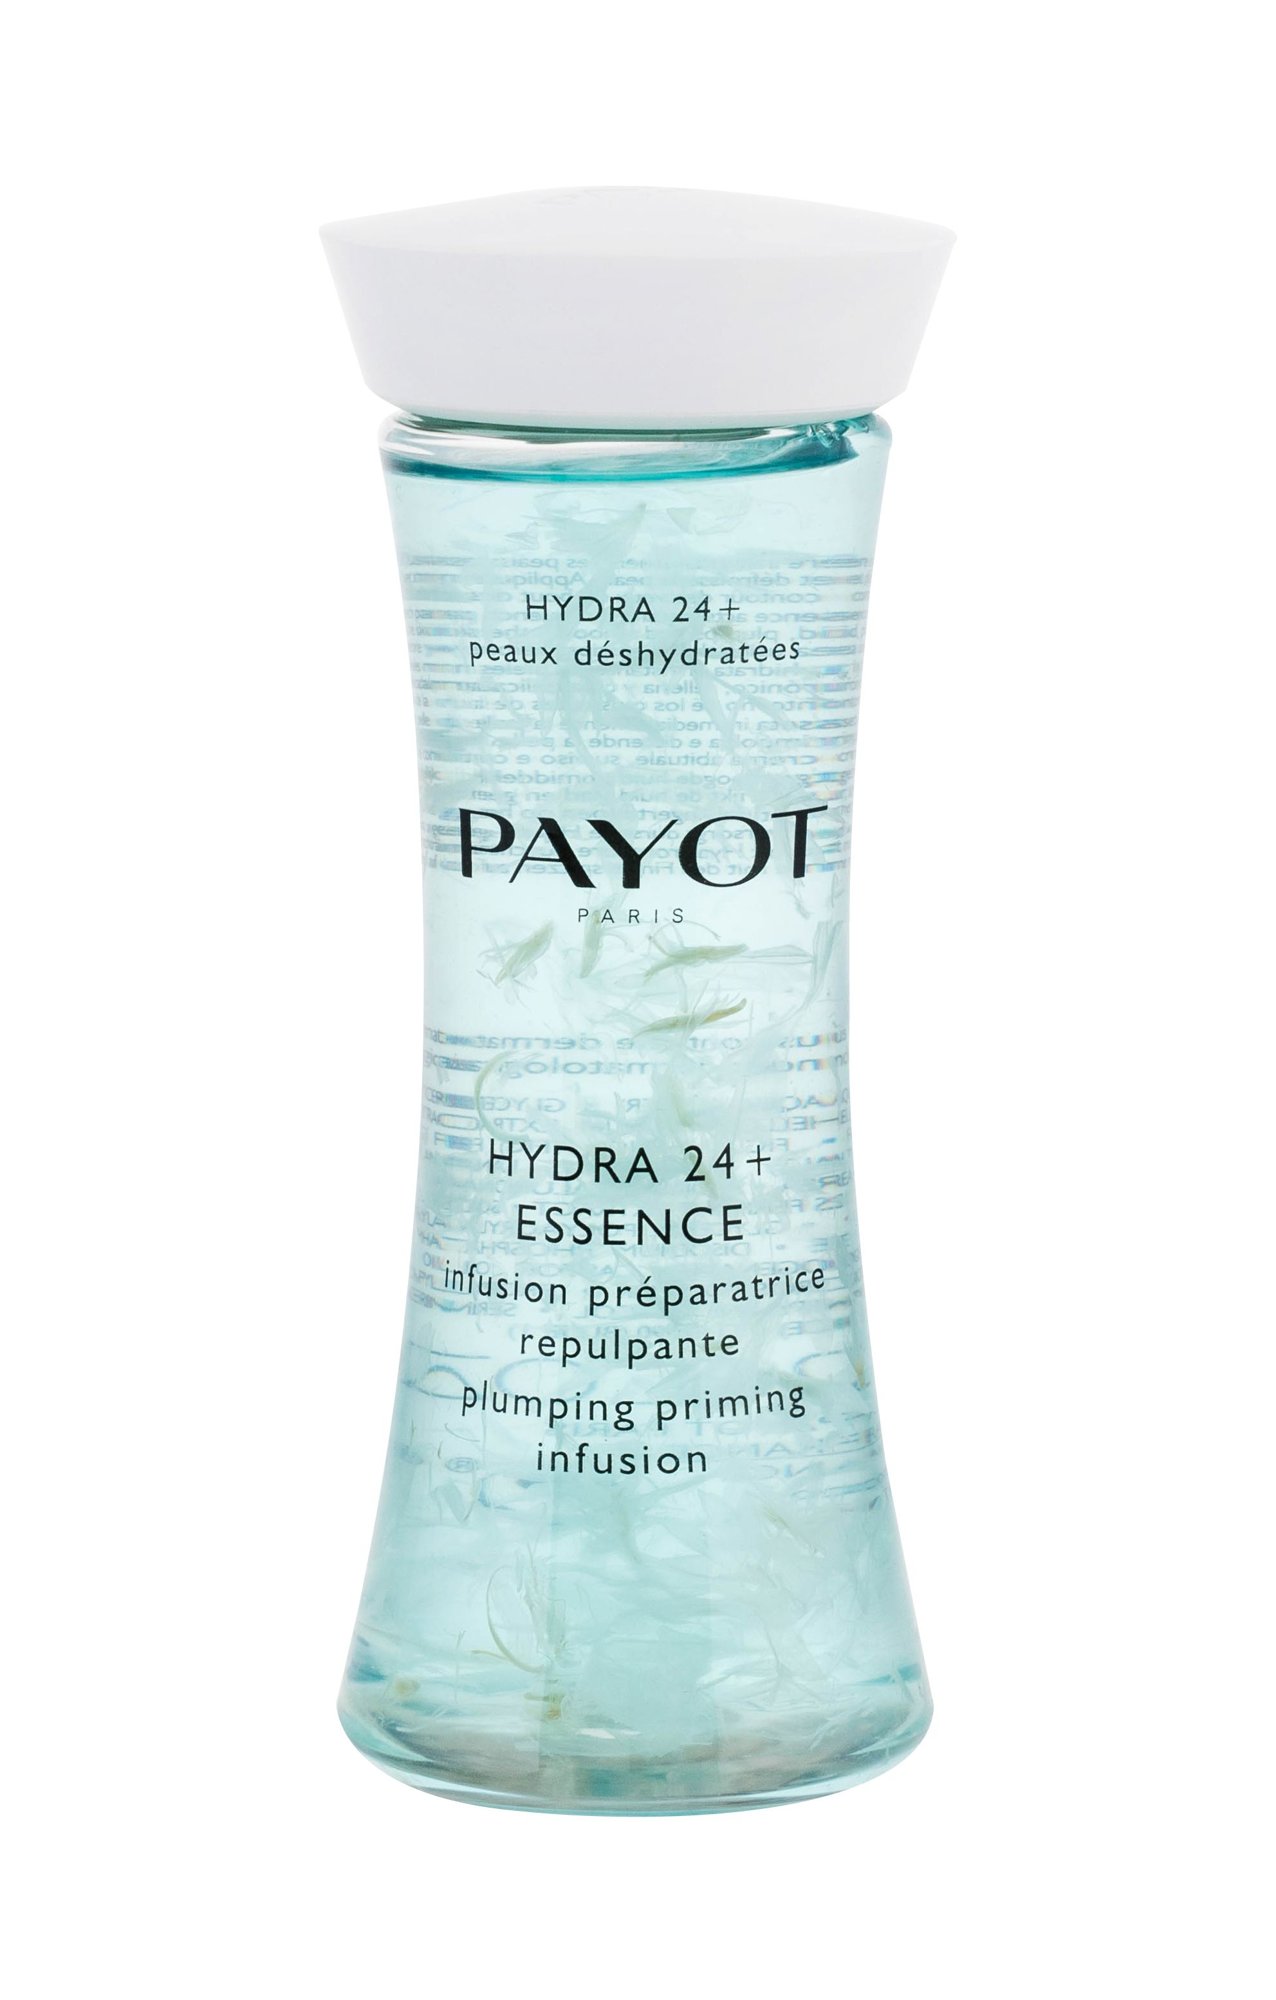 Payot Hydra 24+ Essence primeris